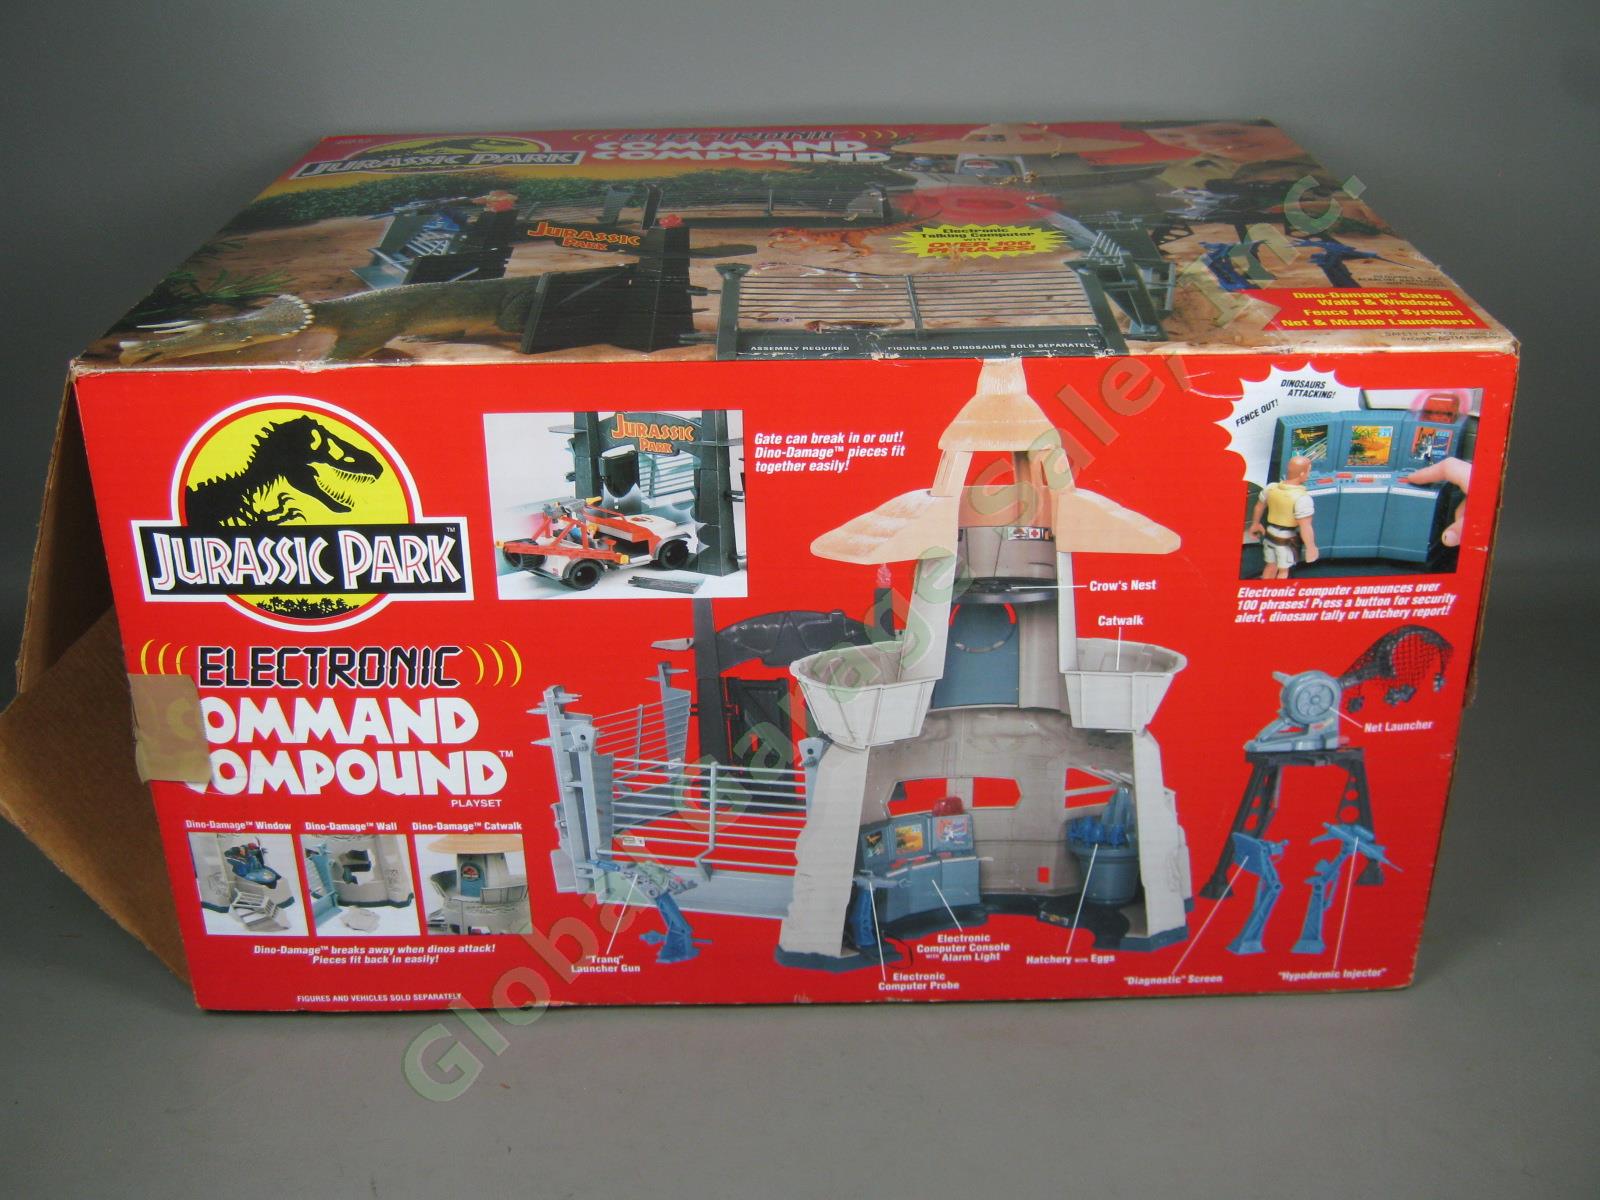 Vtg 1993 Kenner Jurassic Park Electronic Command Compound Dinosaur Playset W/Box 4